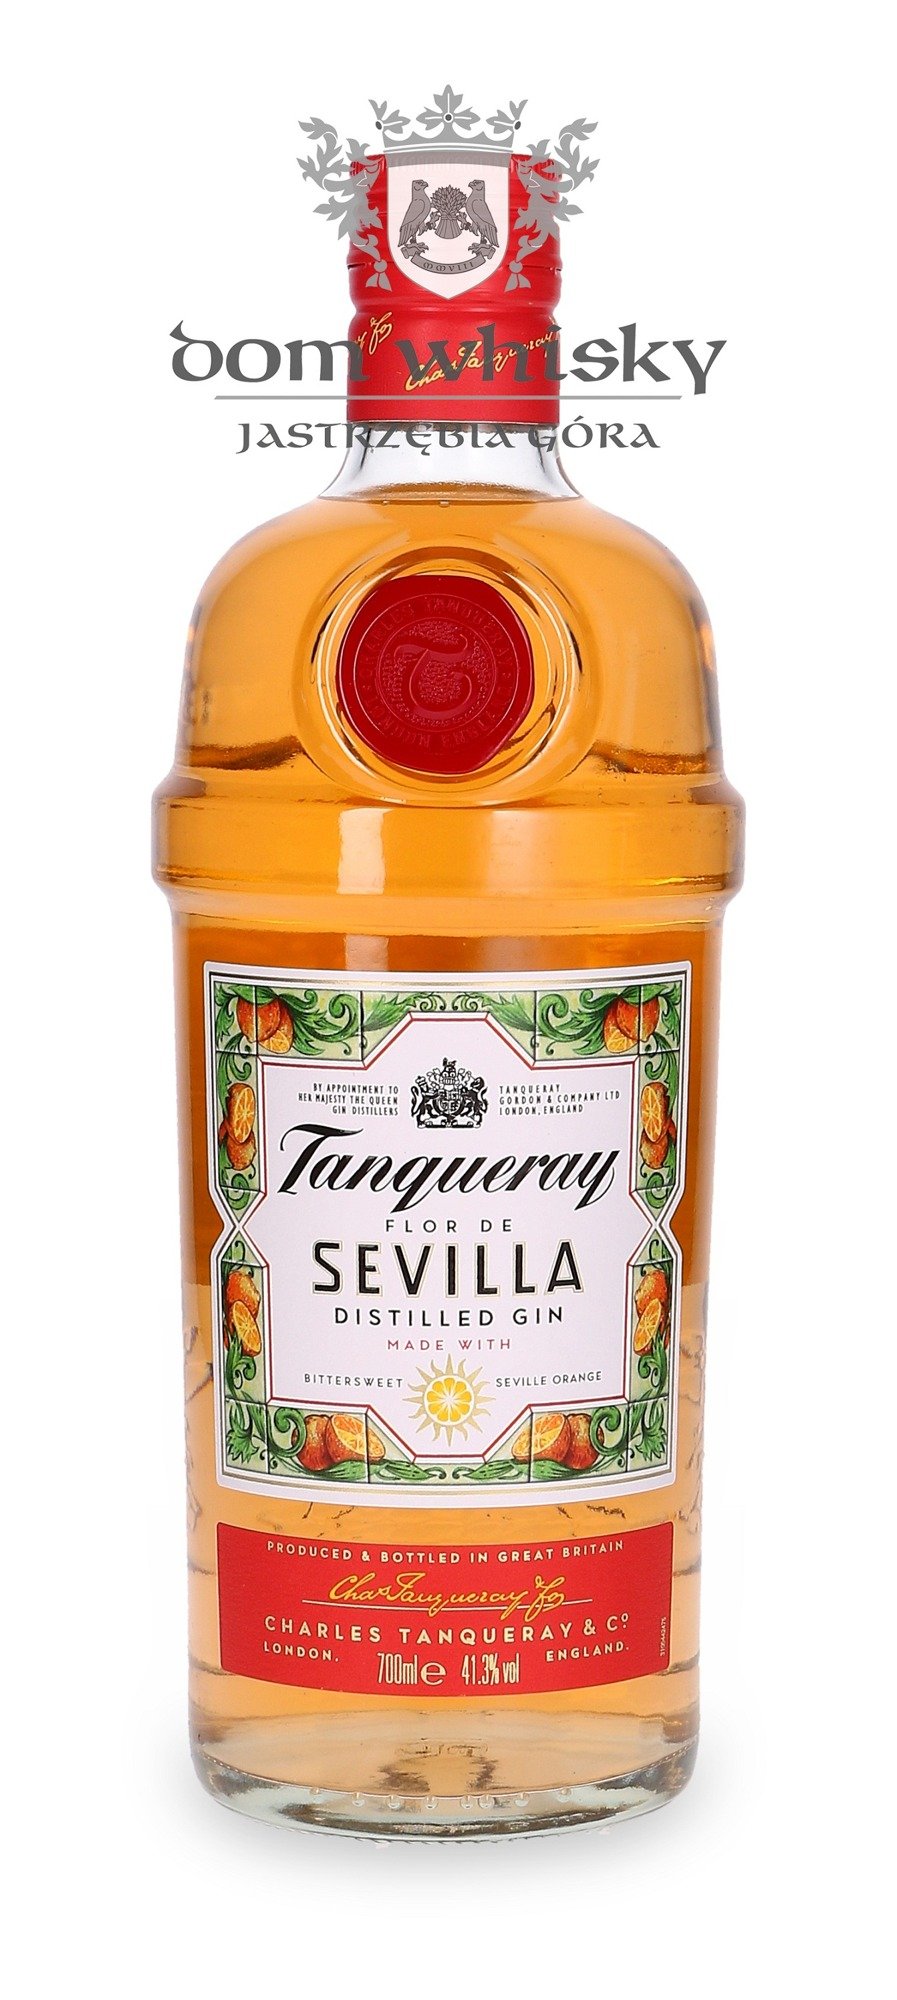 Tanqueray Flor de | 0,7l Dom Whisky 41,3%/ Distilled Sevilla Gin 